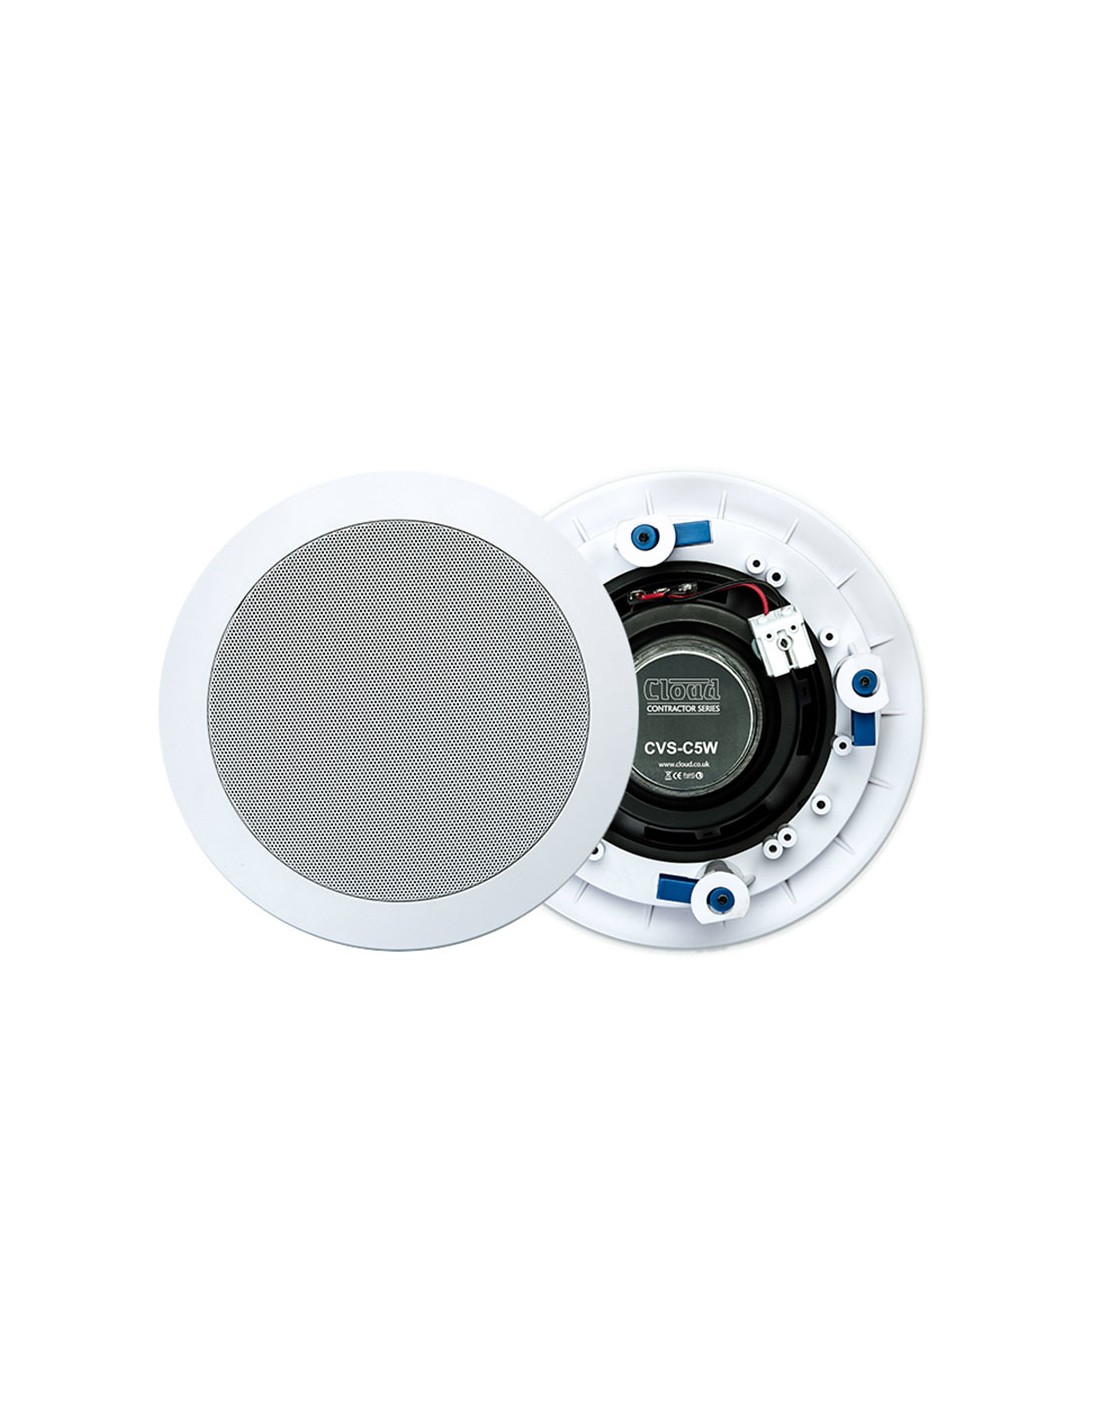 Cavo diffusori - 2x1.5mm² AWG16 - EN50399 CPR Euroclass Cca - s1b